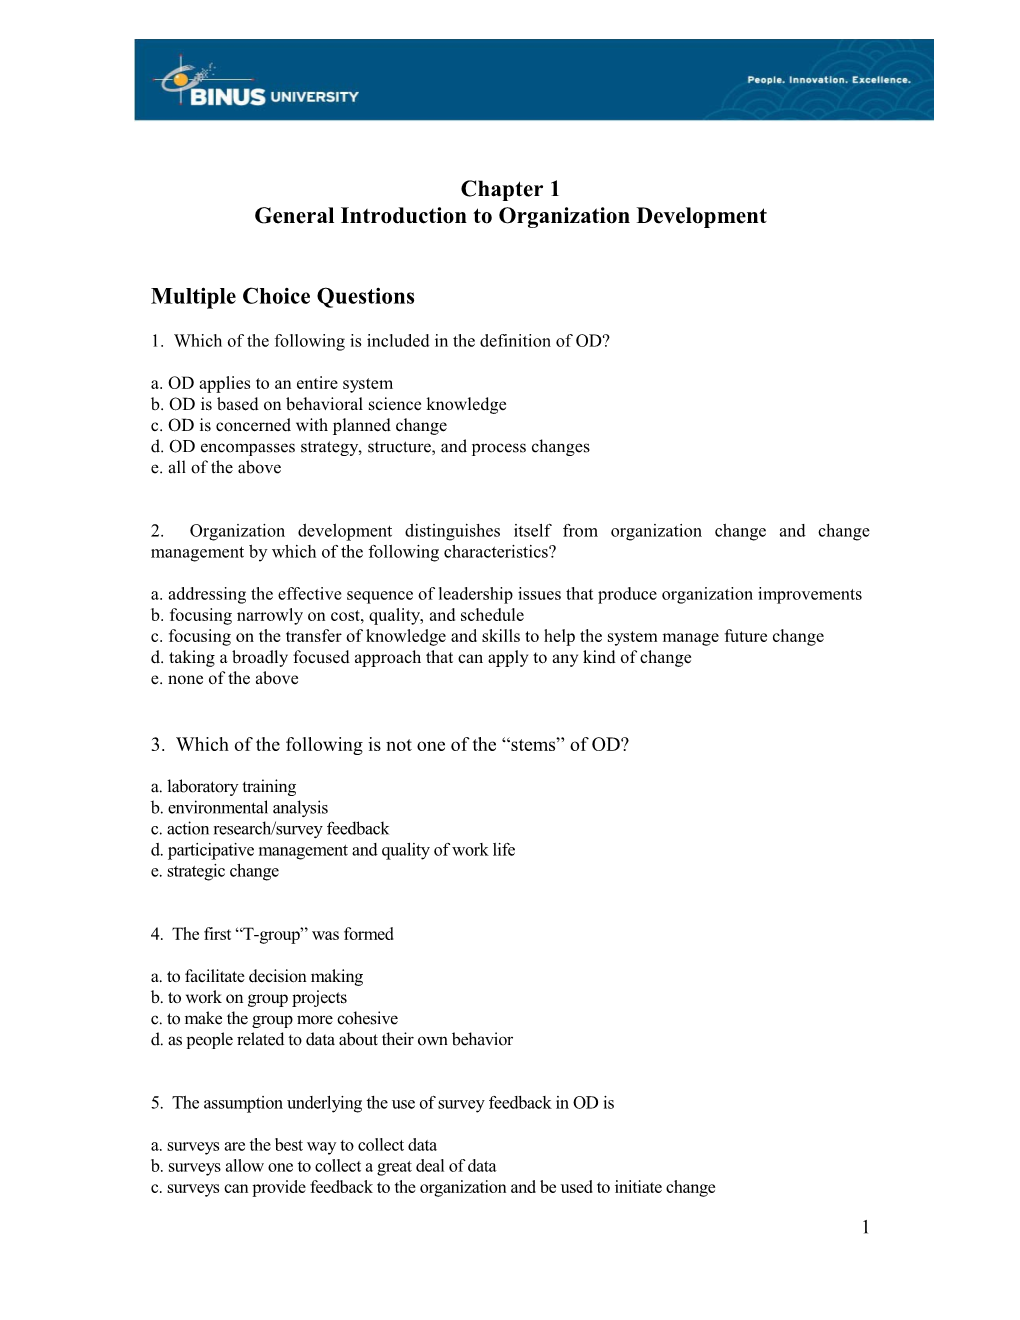 General Introduction to Organization Development